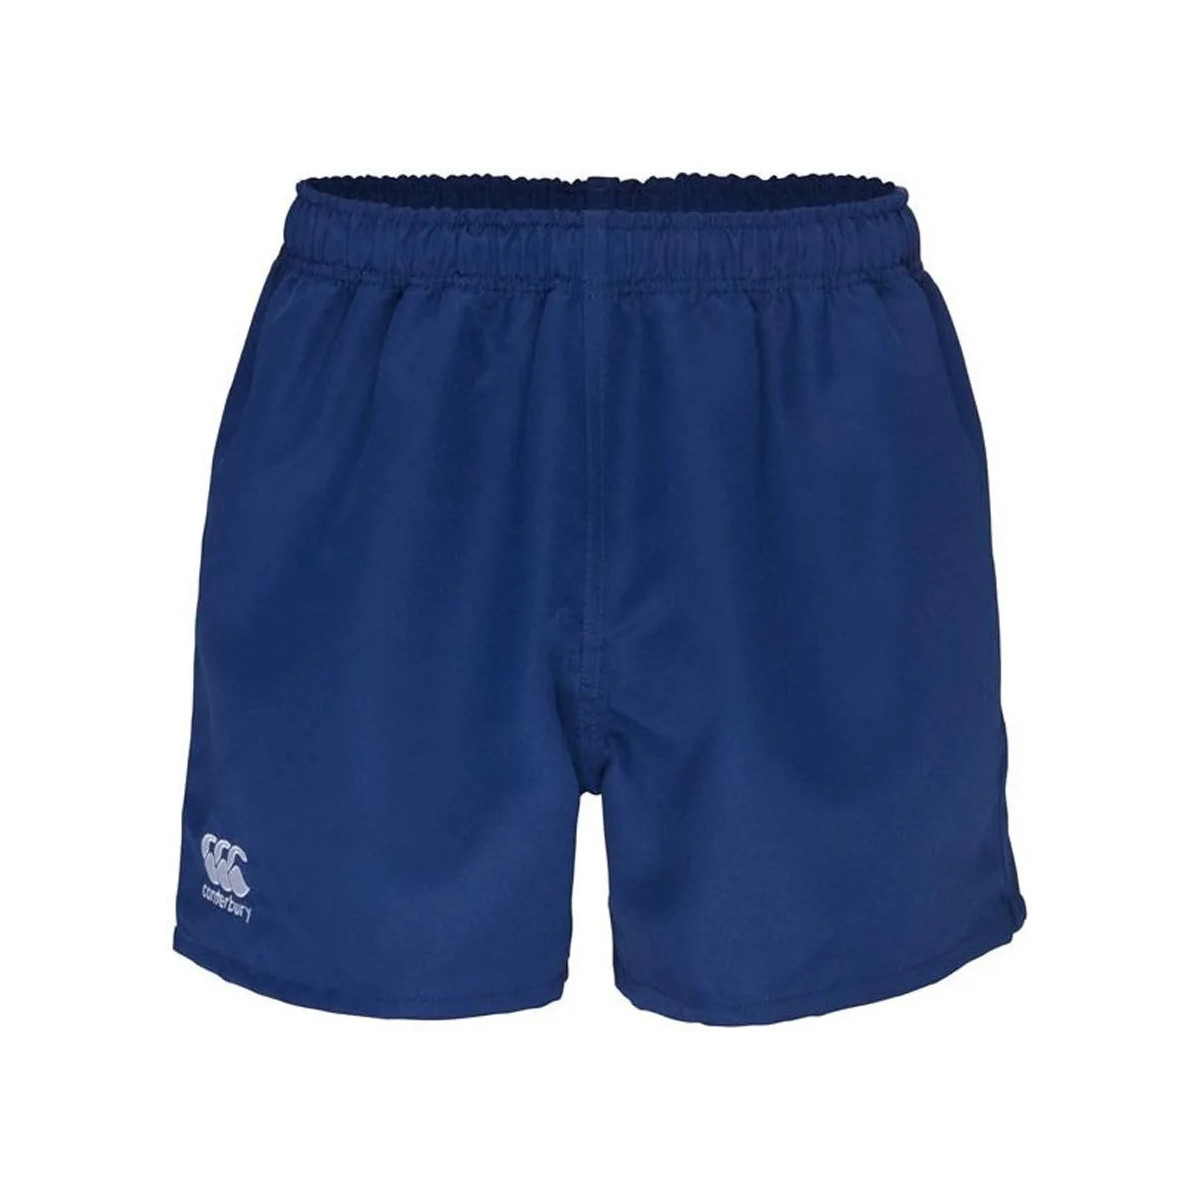 Vêtements Garçon Shorts / Bermudas Canterbury E723447 Bleu